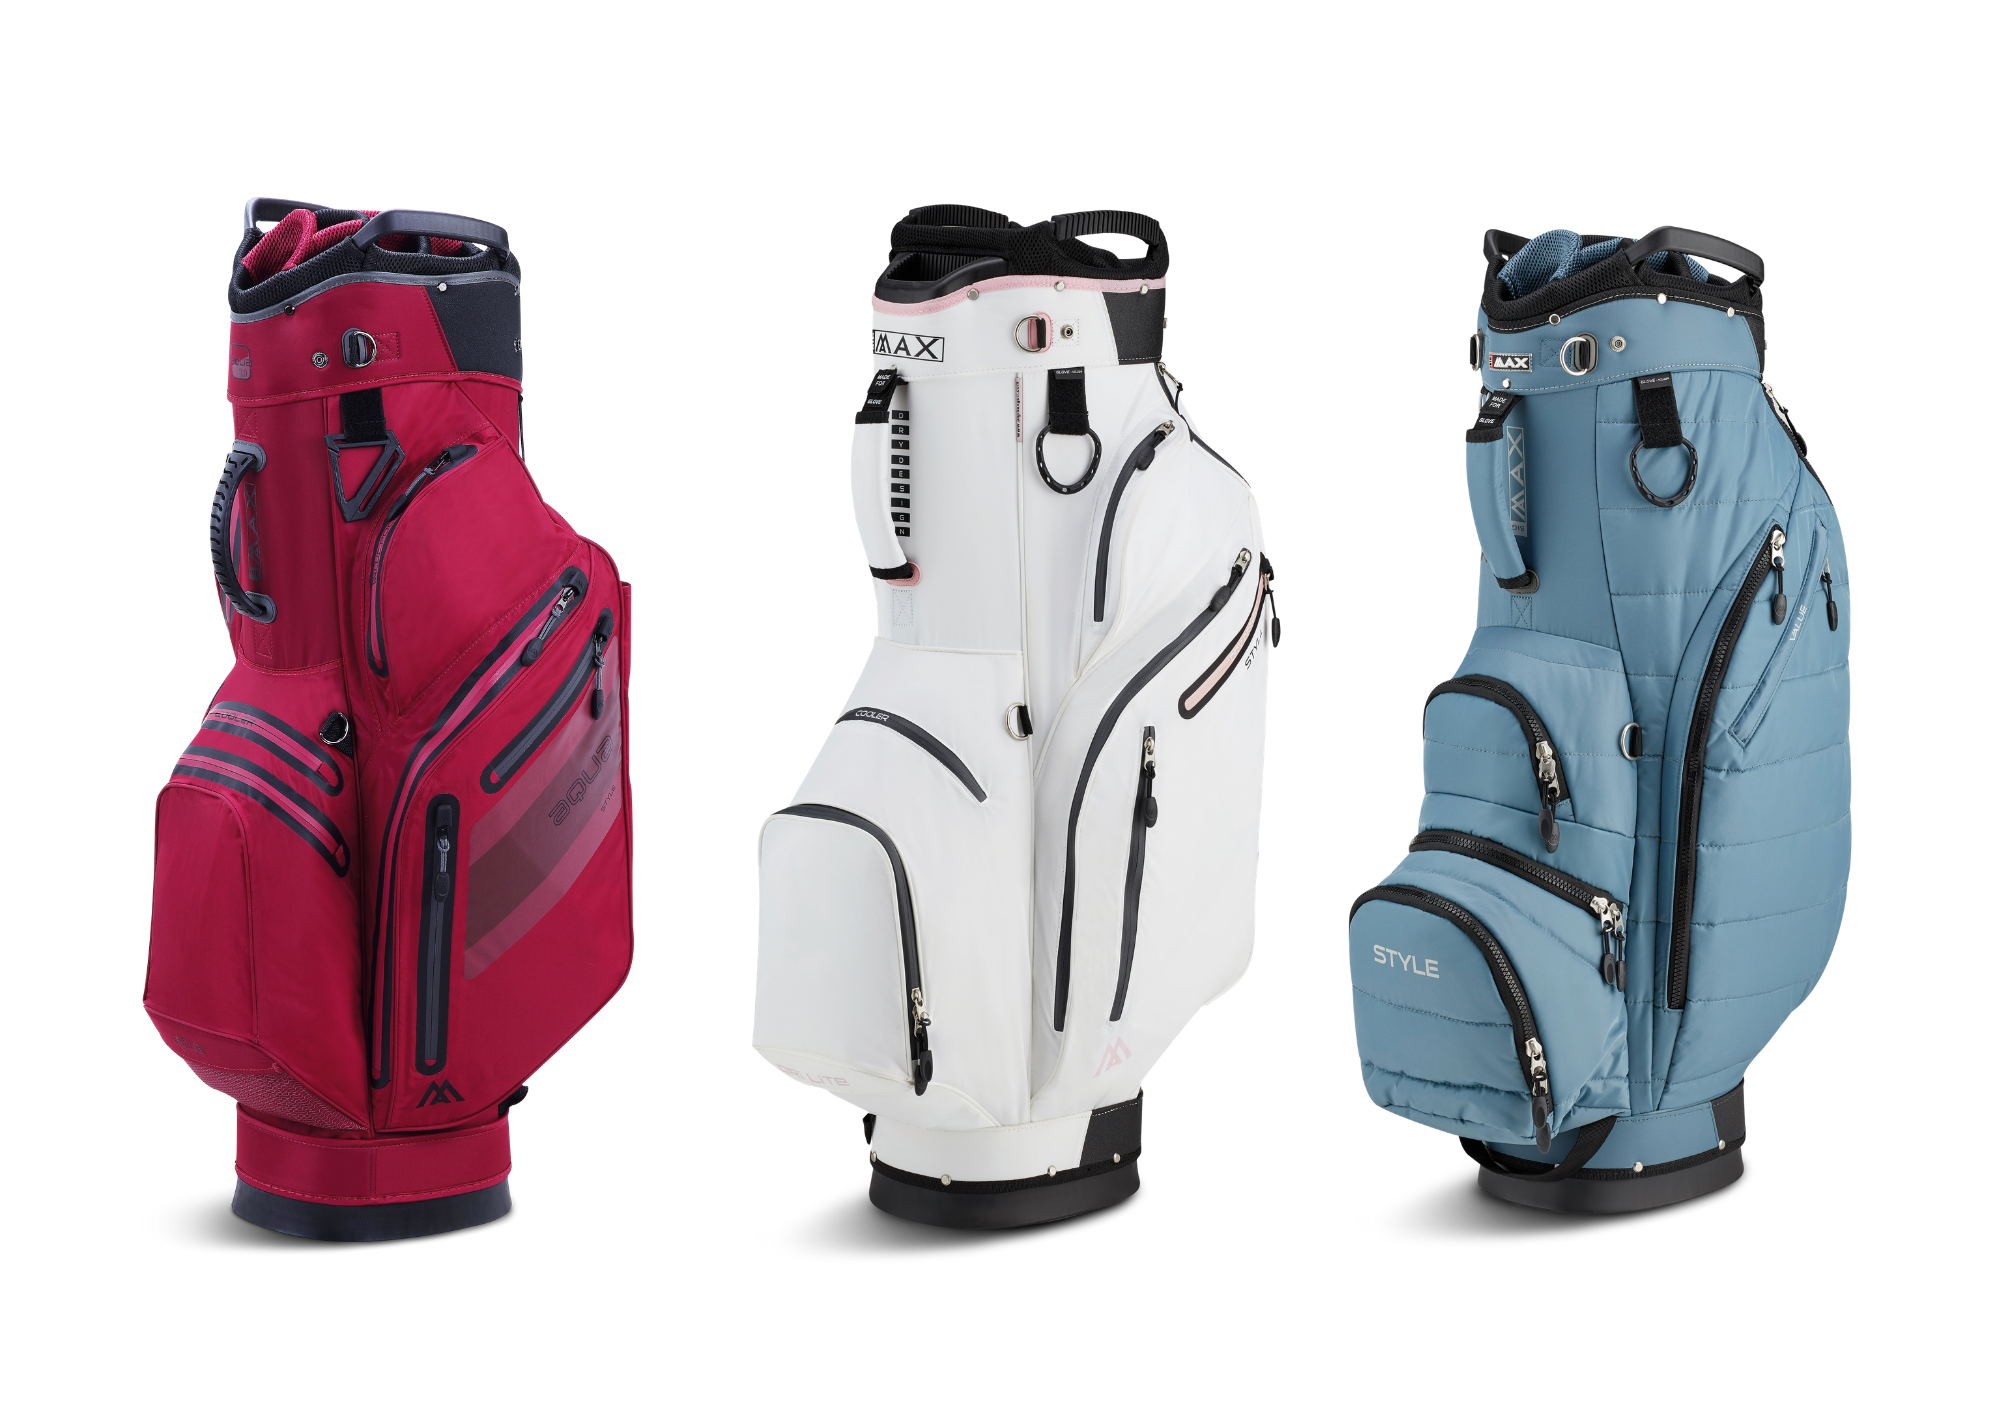 Boekwinkel Op te slaan Zonder BIG MAX introduces three new golf bags to its range | GolfMagic